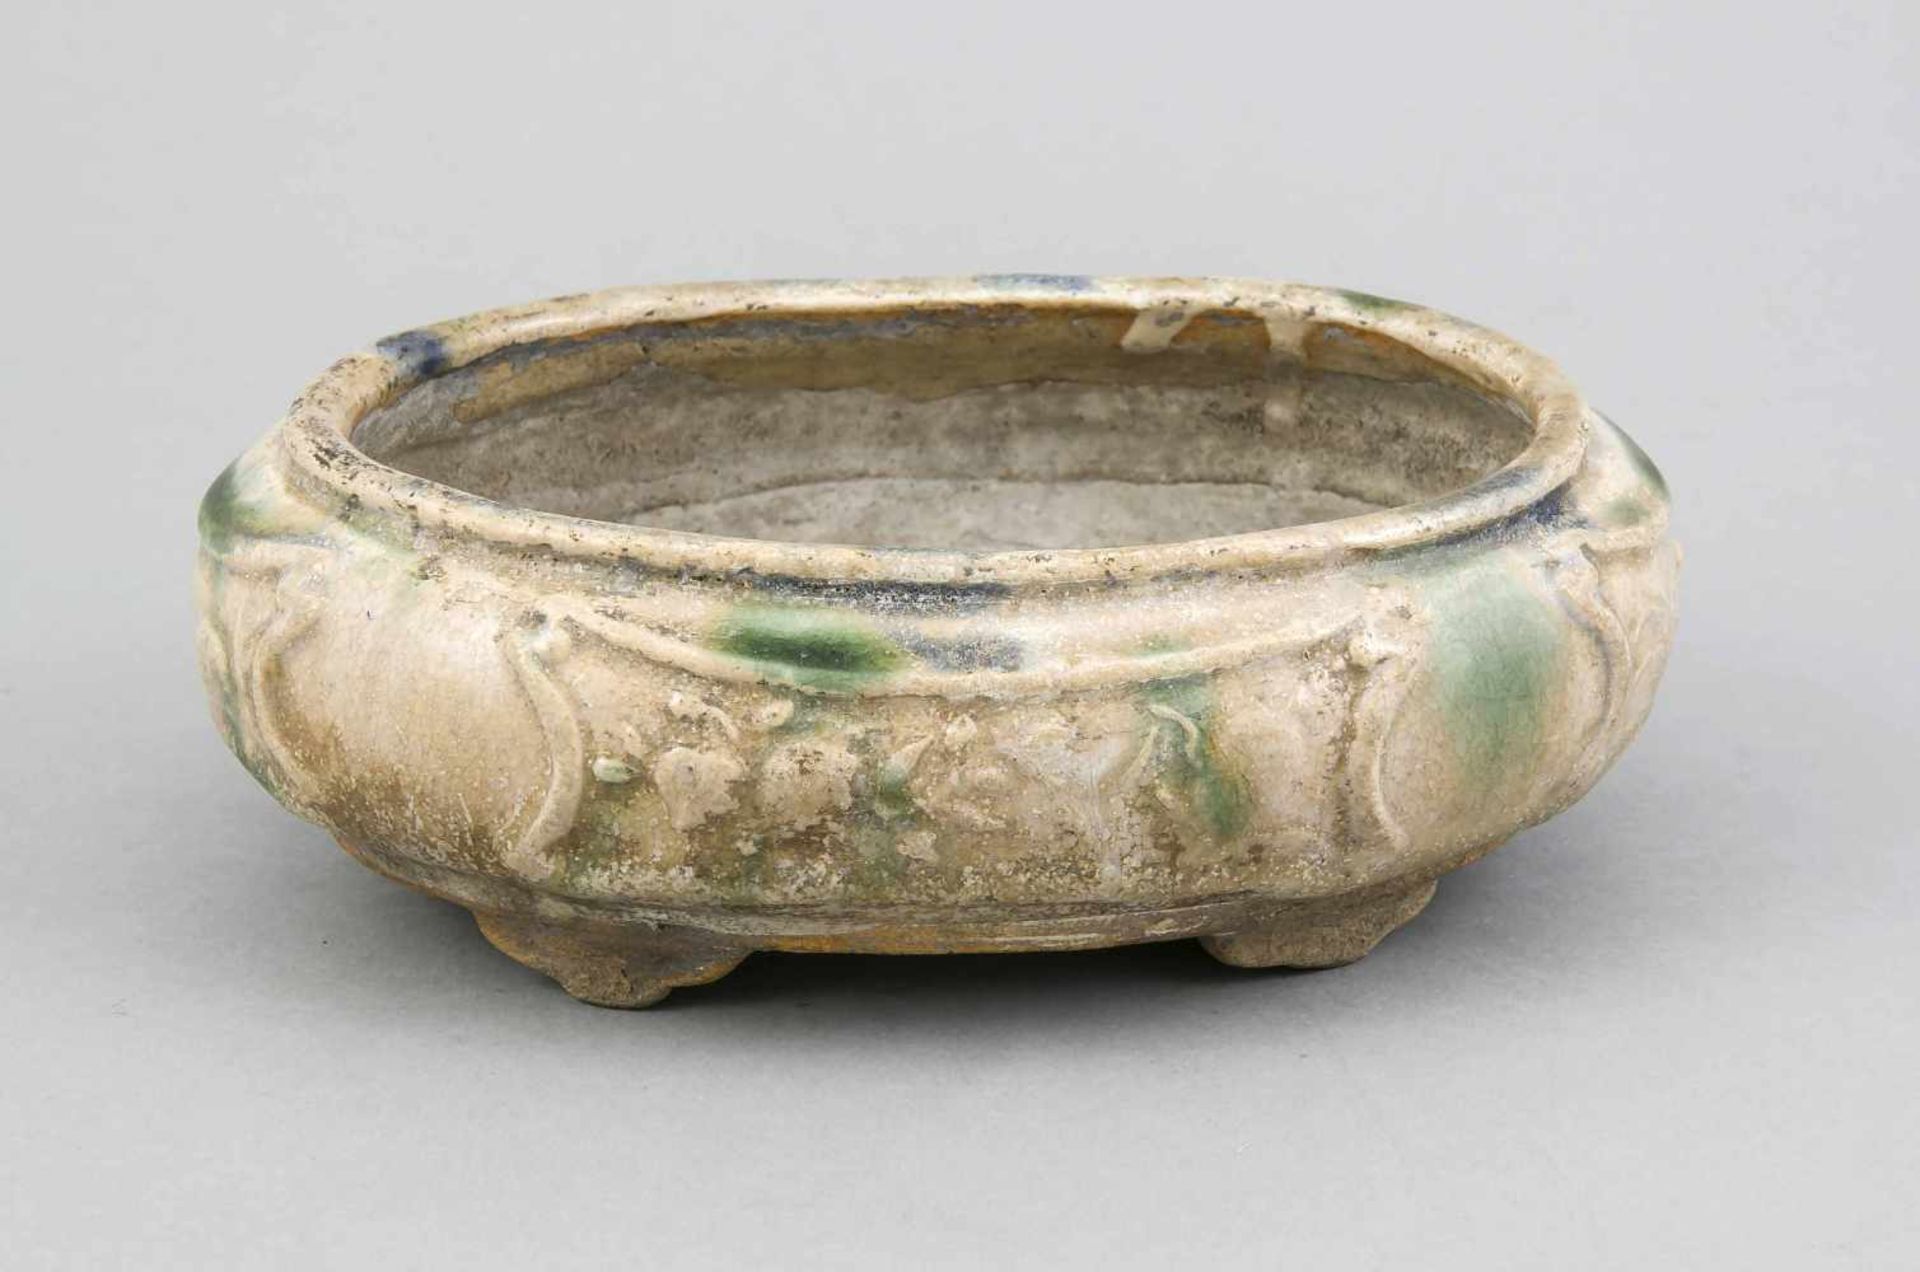 Ovales Bonsai-Gefäß, Japan, 19. Jh., Keramik, beigefarbene Glasur, part. grün und blau